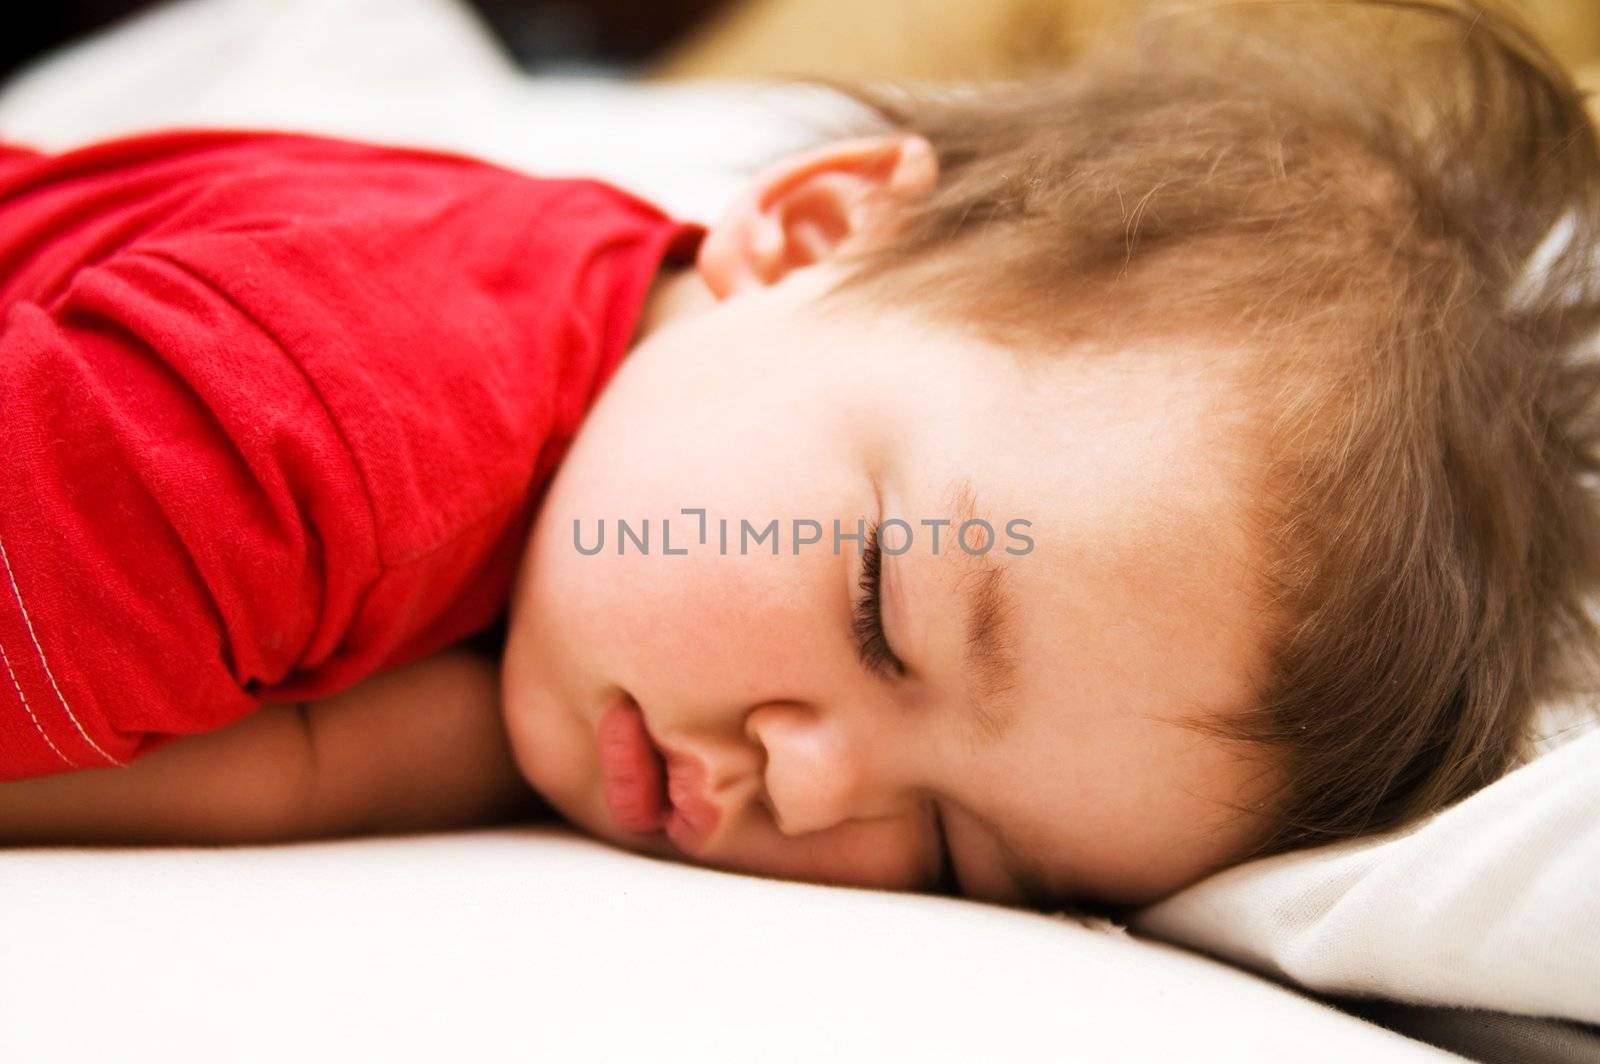 Boy in red dress sleeping on bed by lilsla